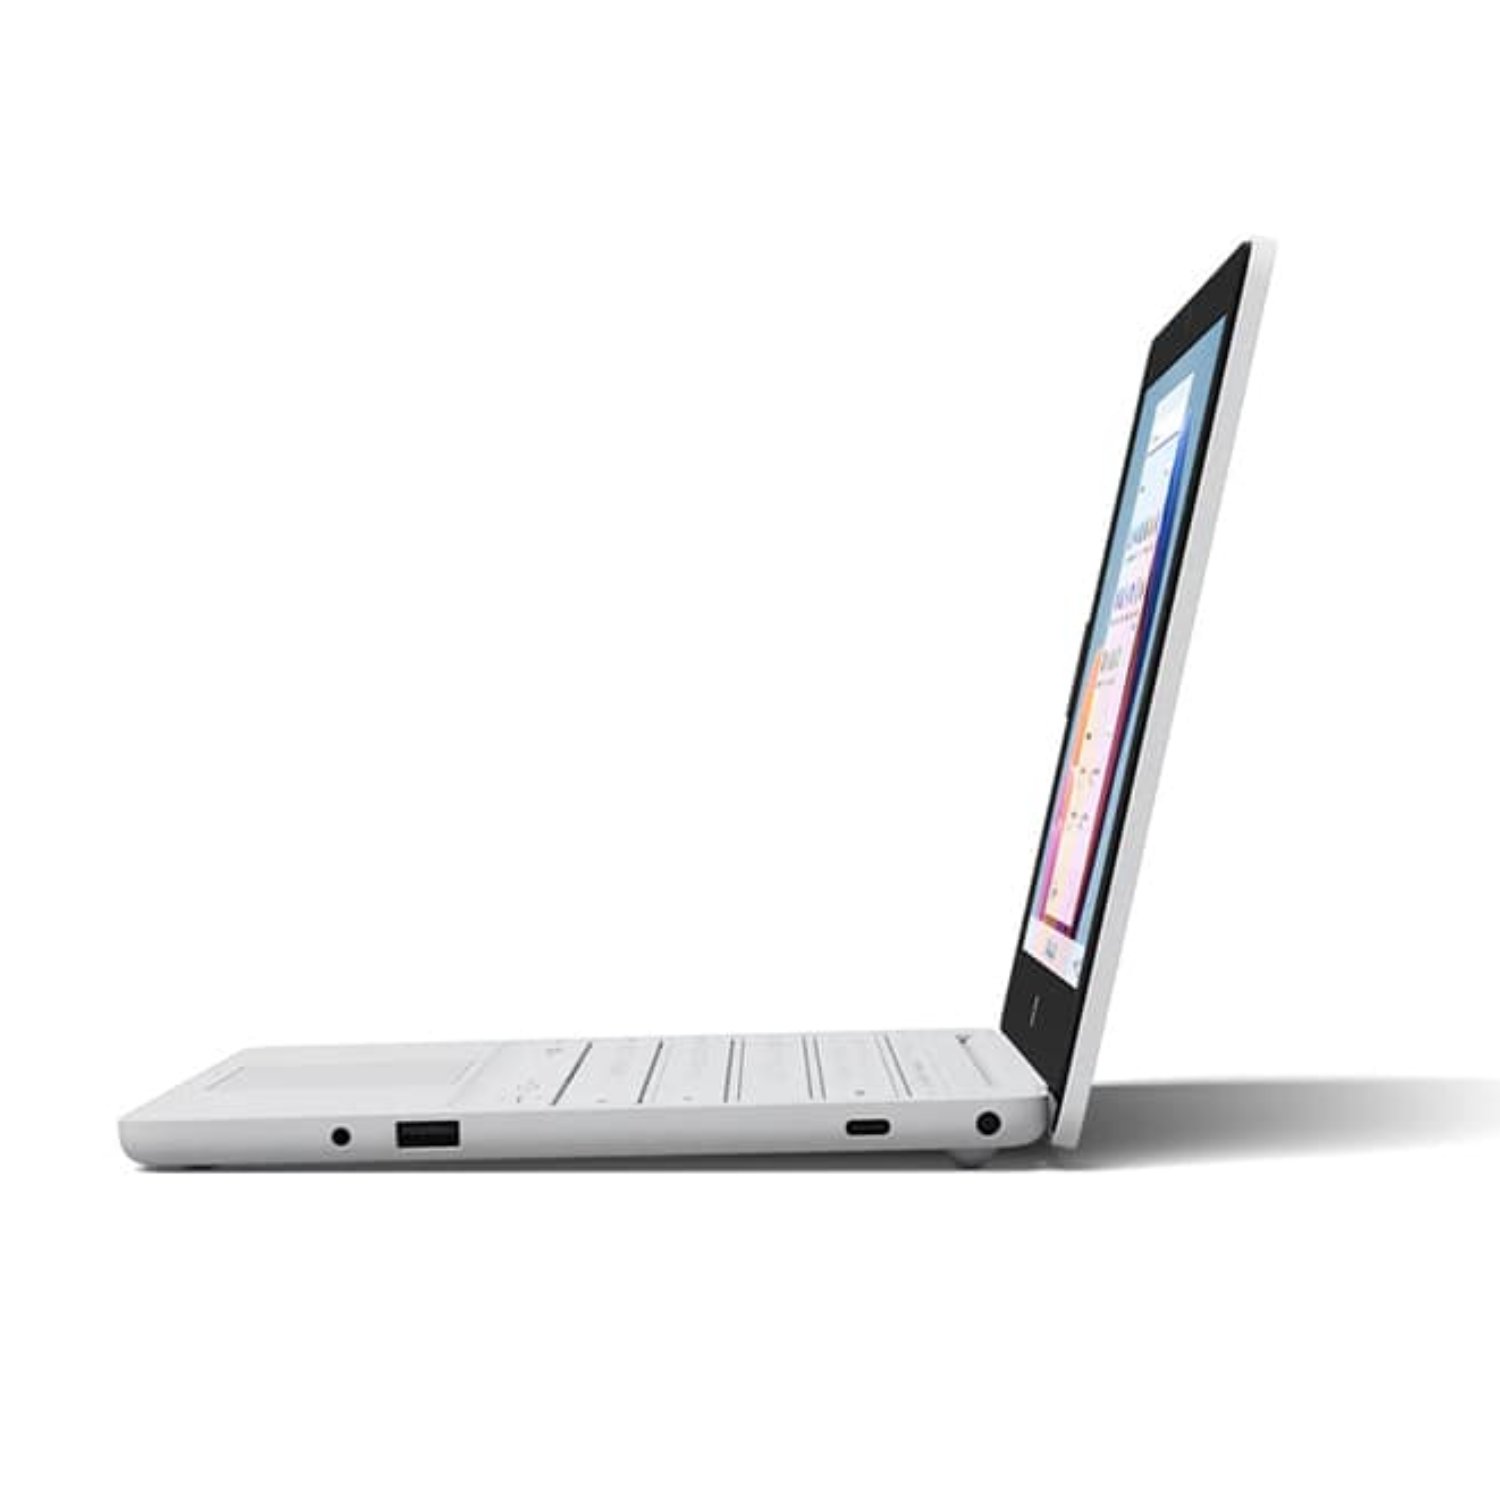 سرفیس لپ تاپ SE مایکروسافت 11 اینچ  Celeron N4120-4G-128G  